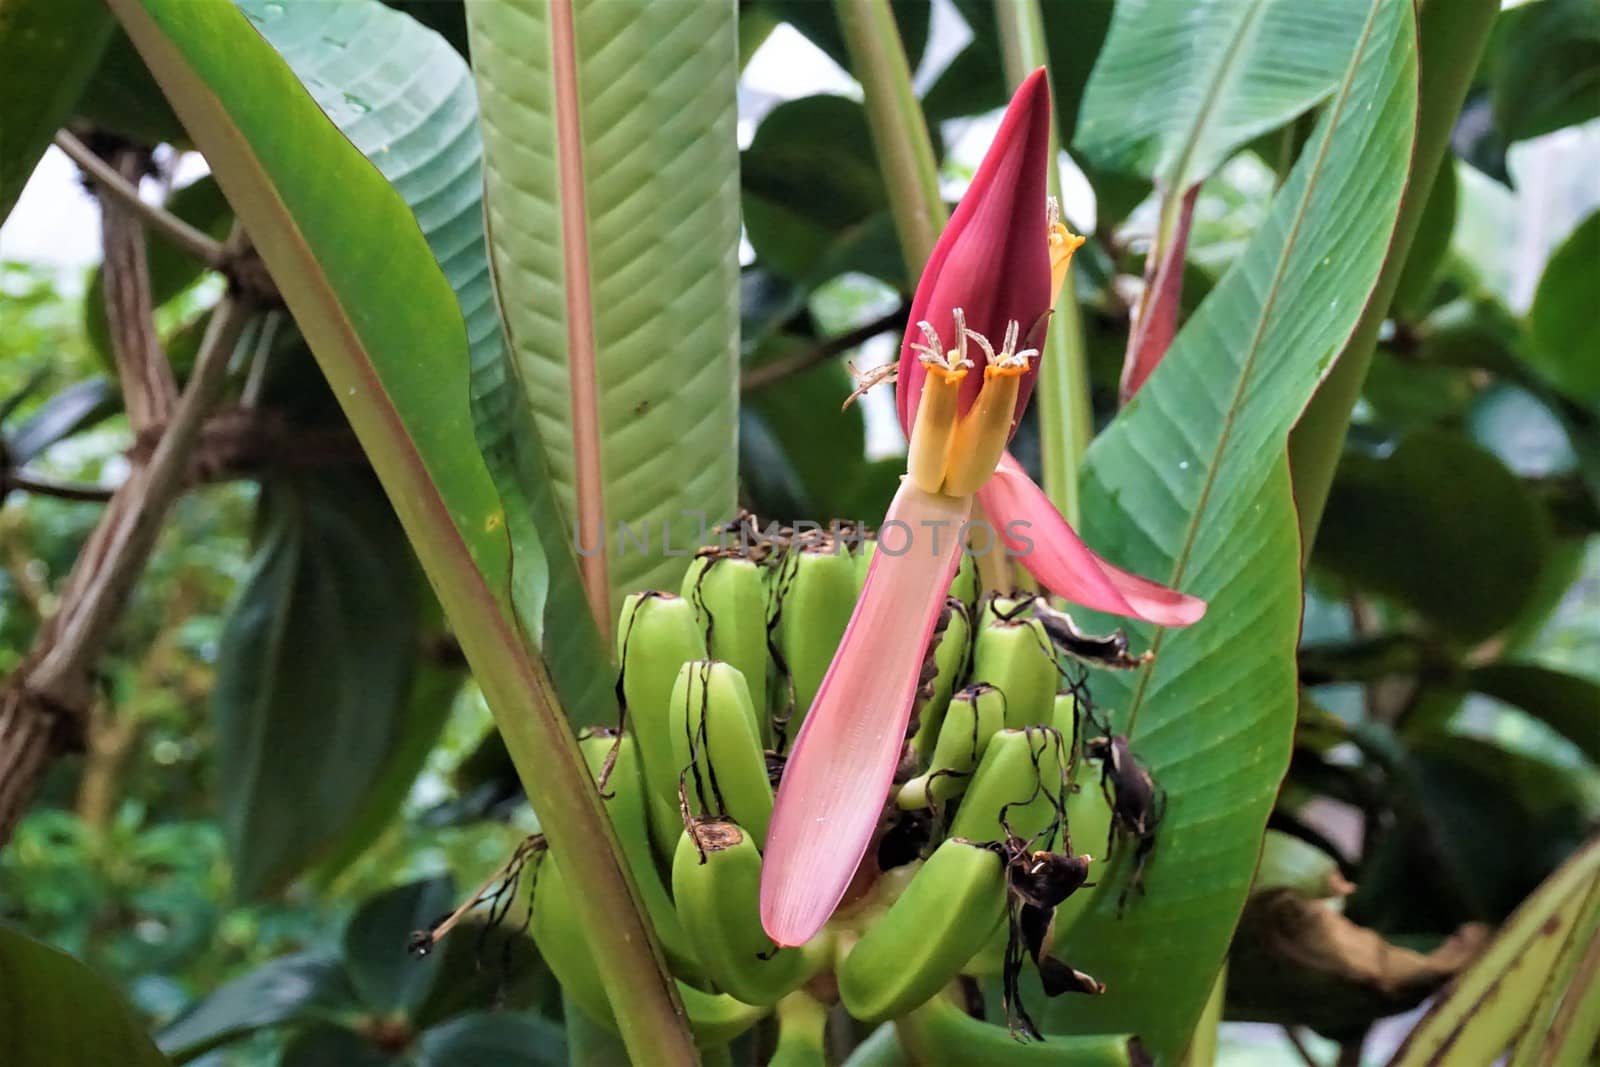 Blossom and small green fruits of a banana tree